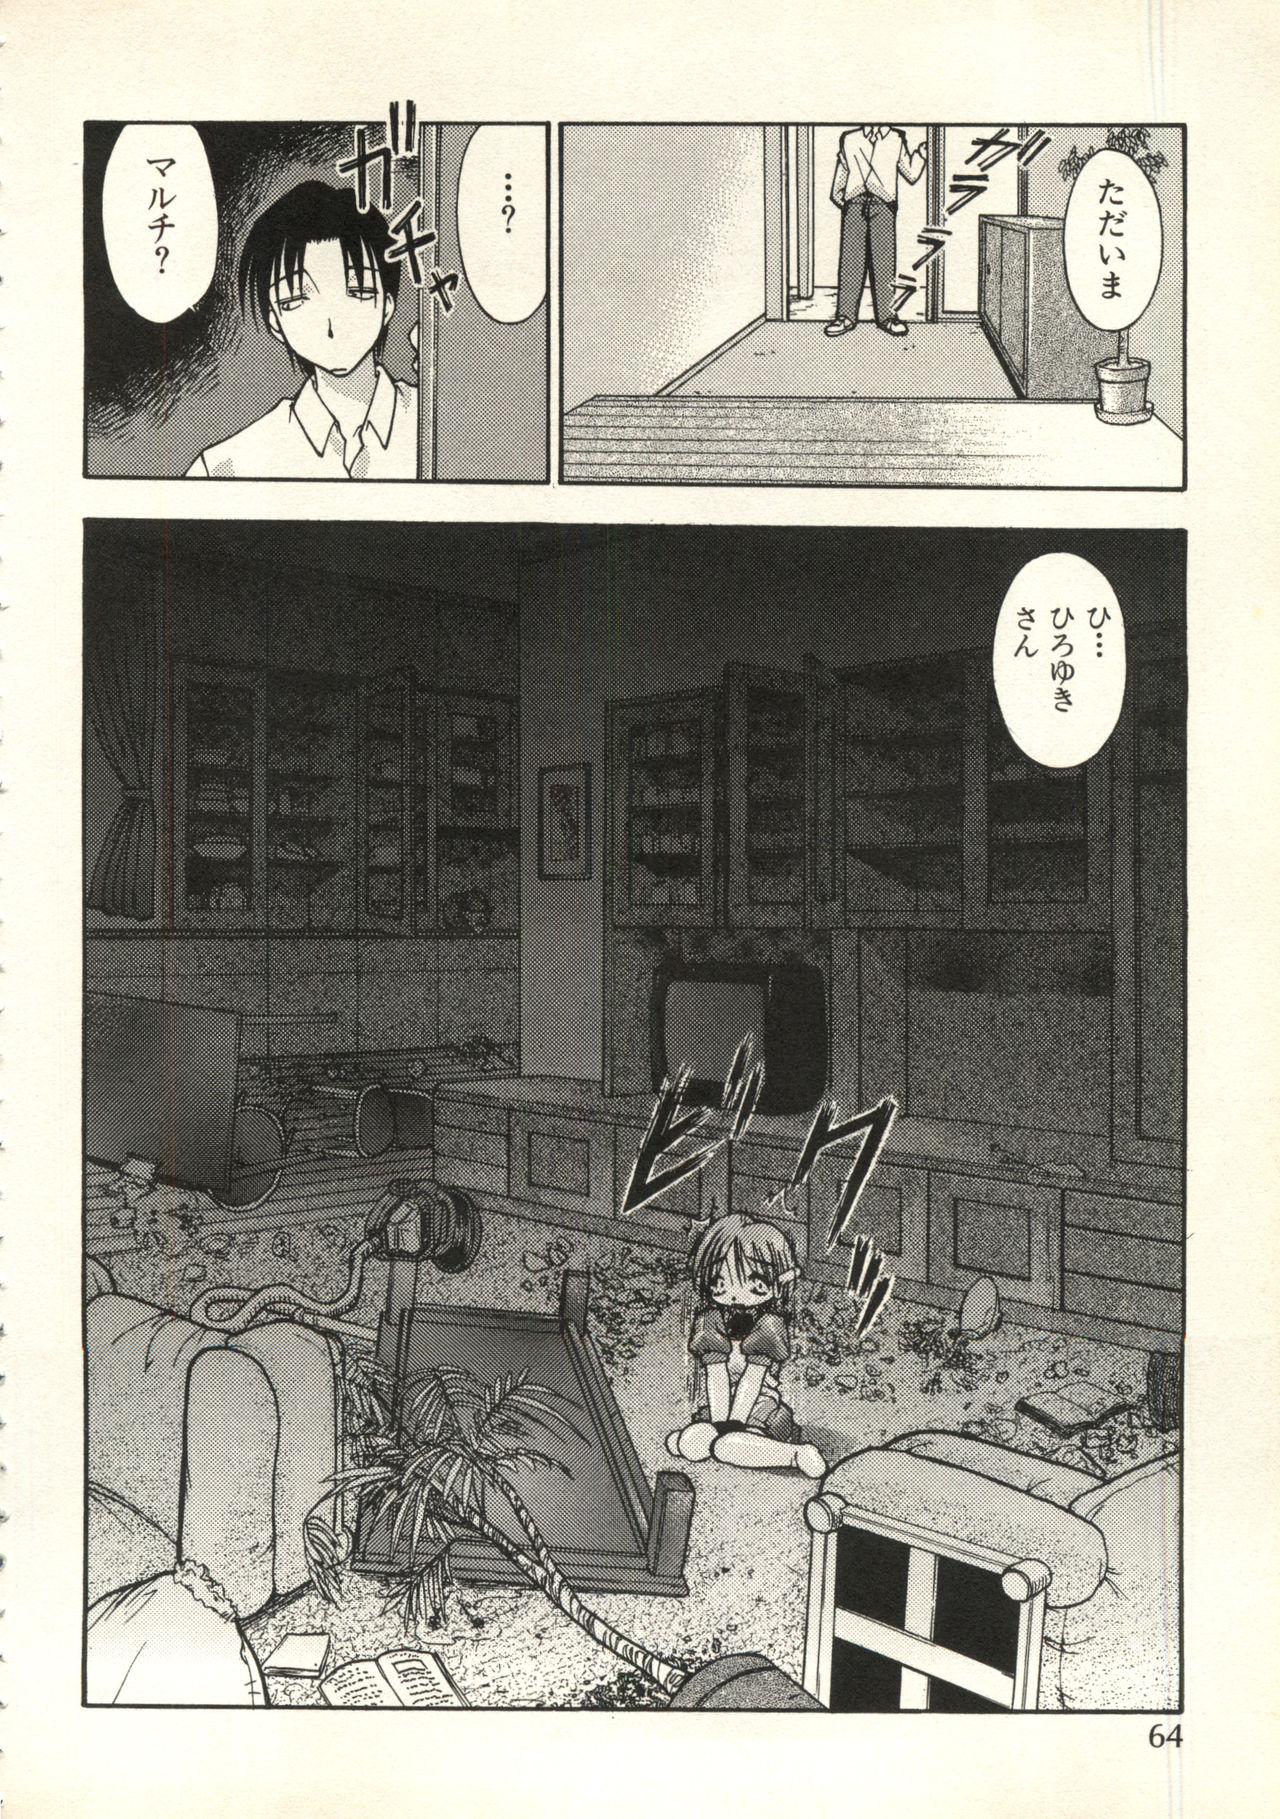 [Anthology] Bishoujo Shoukougun V3 (1) '99 Summer Edition (Various) 64